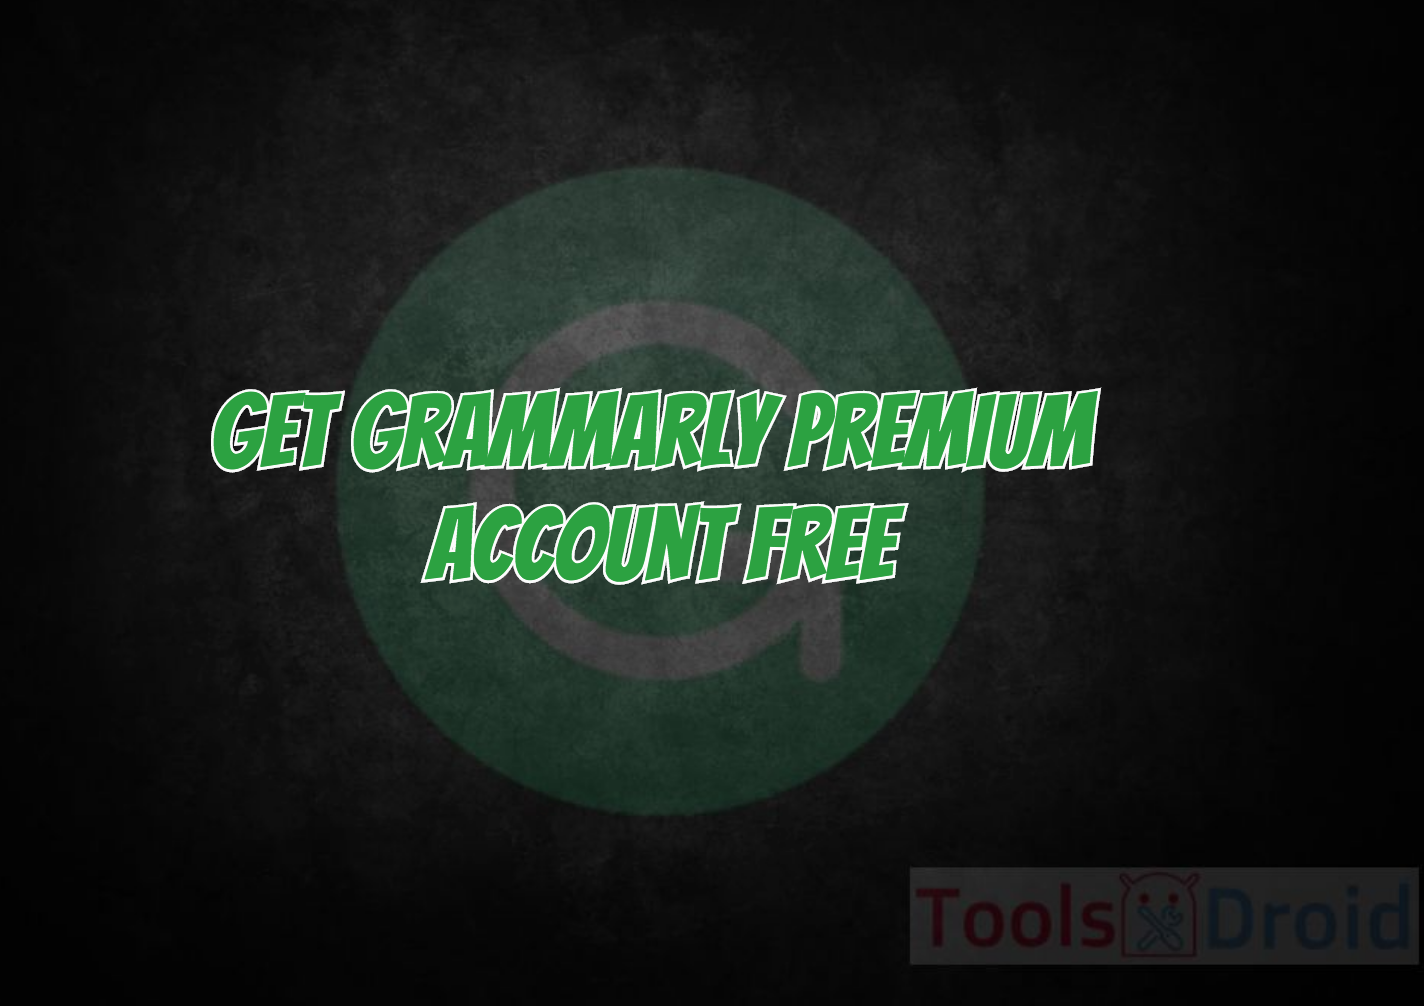 grammarly free premium trial 2018